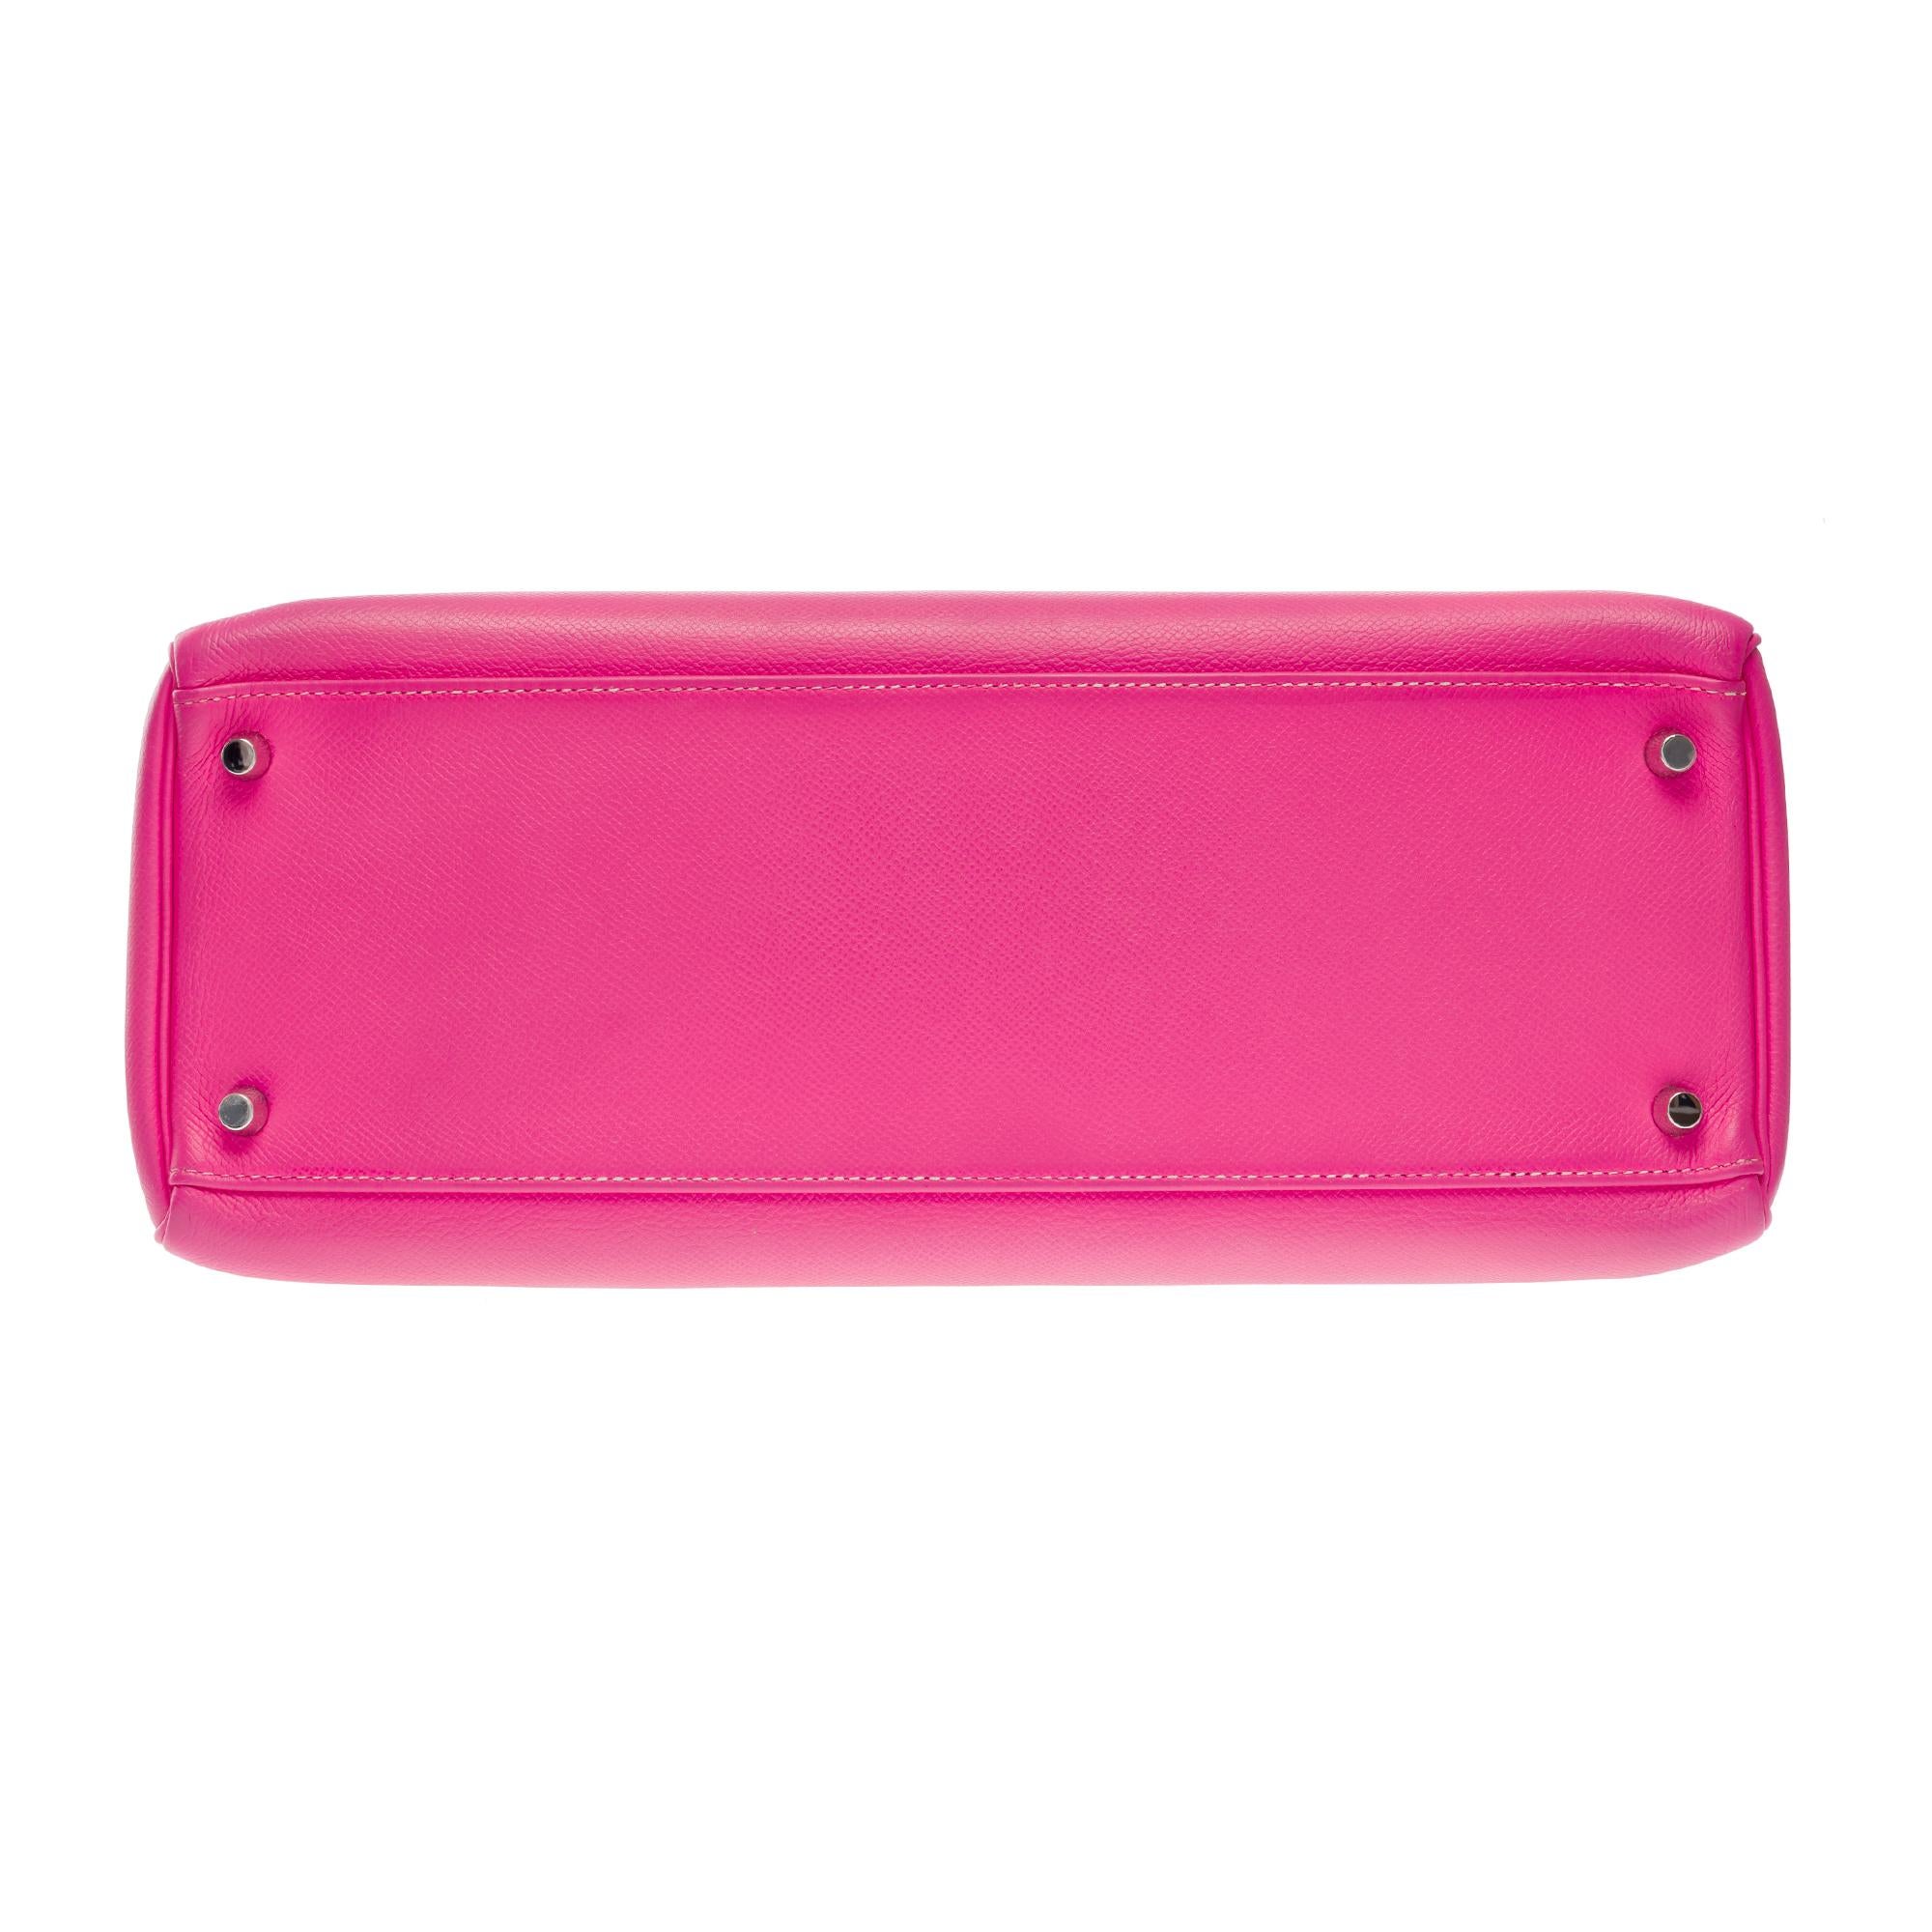 Candy Edition Hermès Kelly 35 retourne handbag strap in Pink Epsom leather, SHW 5